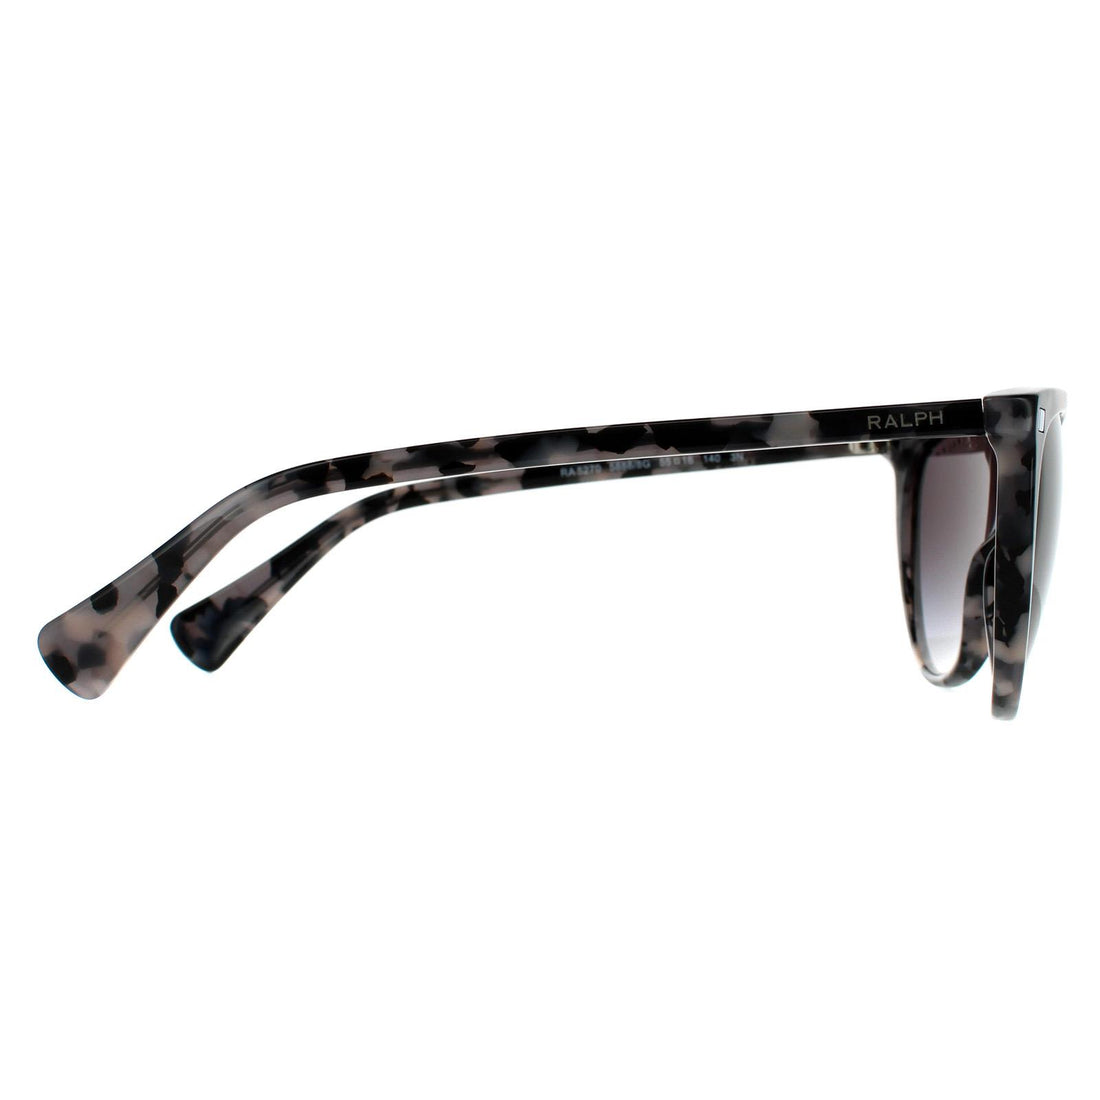 Ralph by Ralph Lauren Sunglasses RA5270 58888G Shiny Spotted Black Havana Grey Gradient